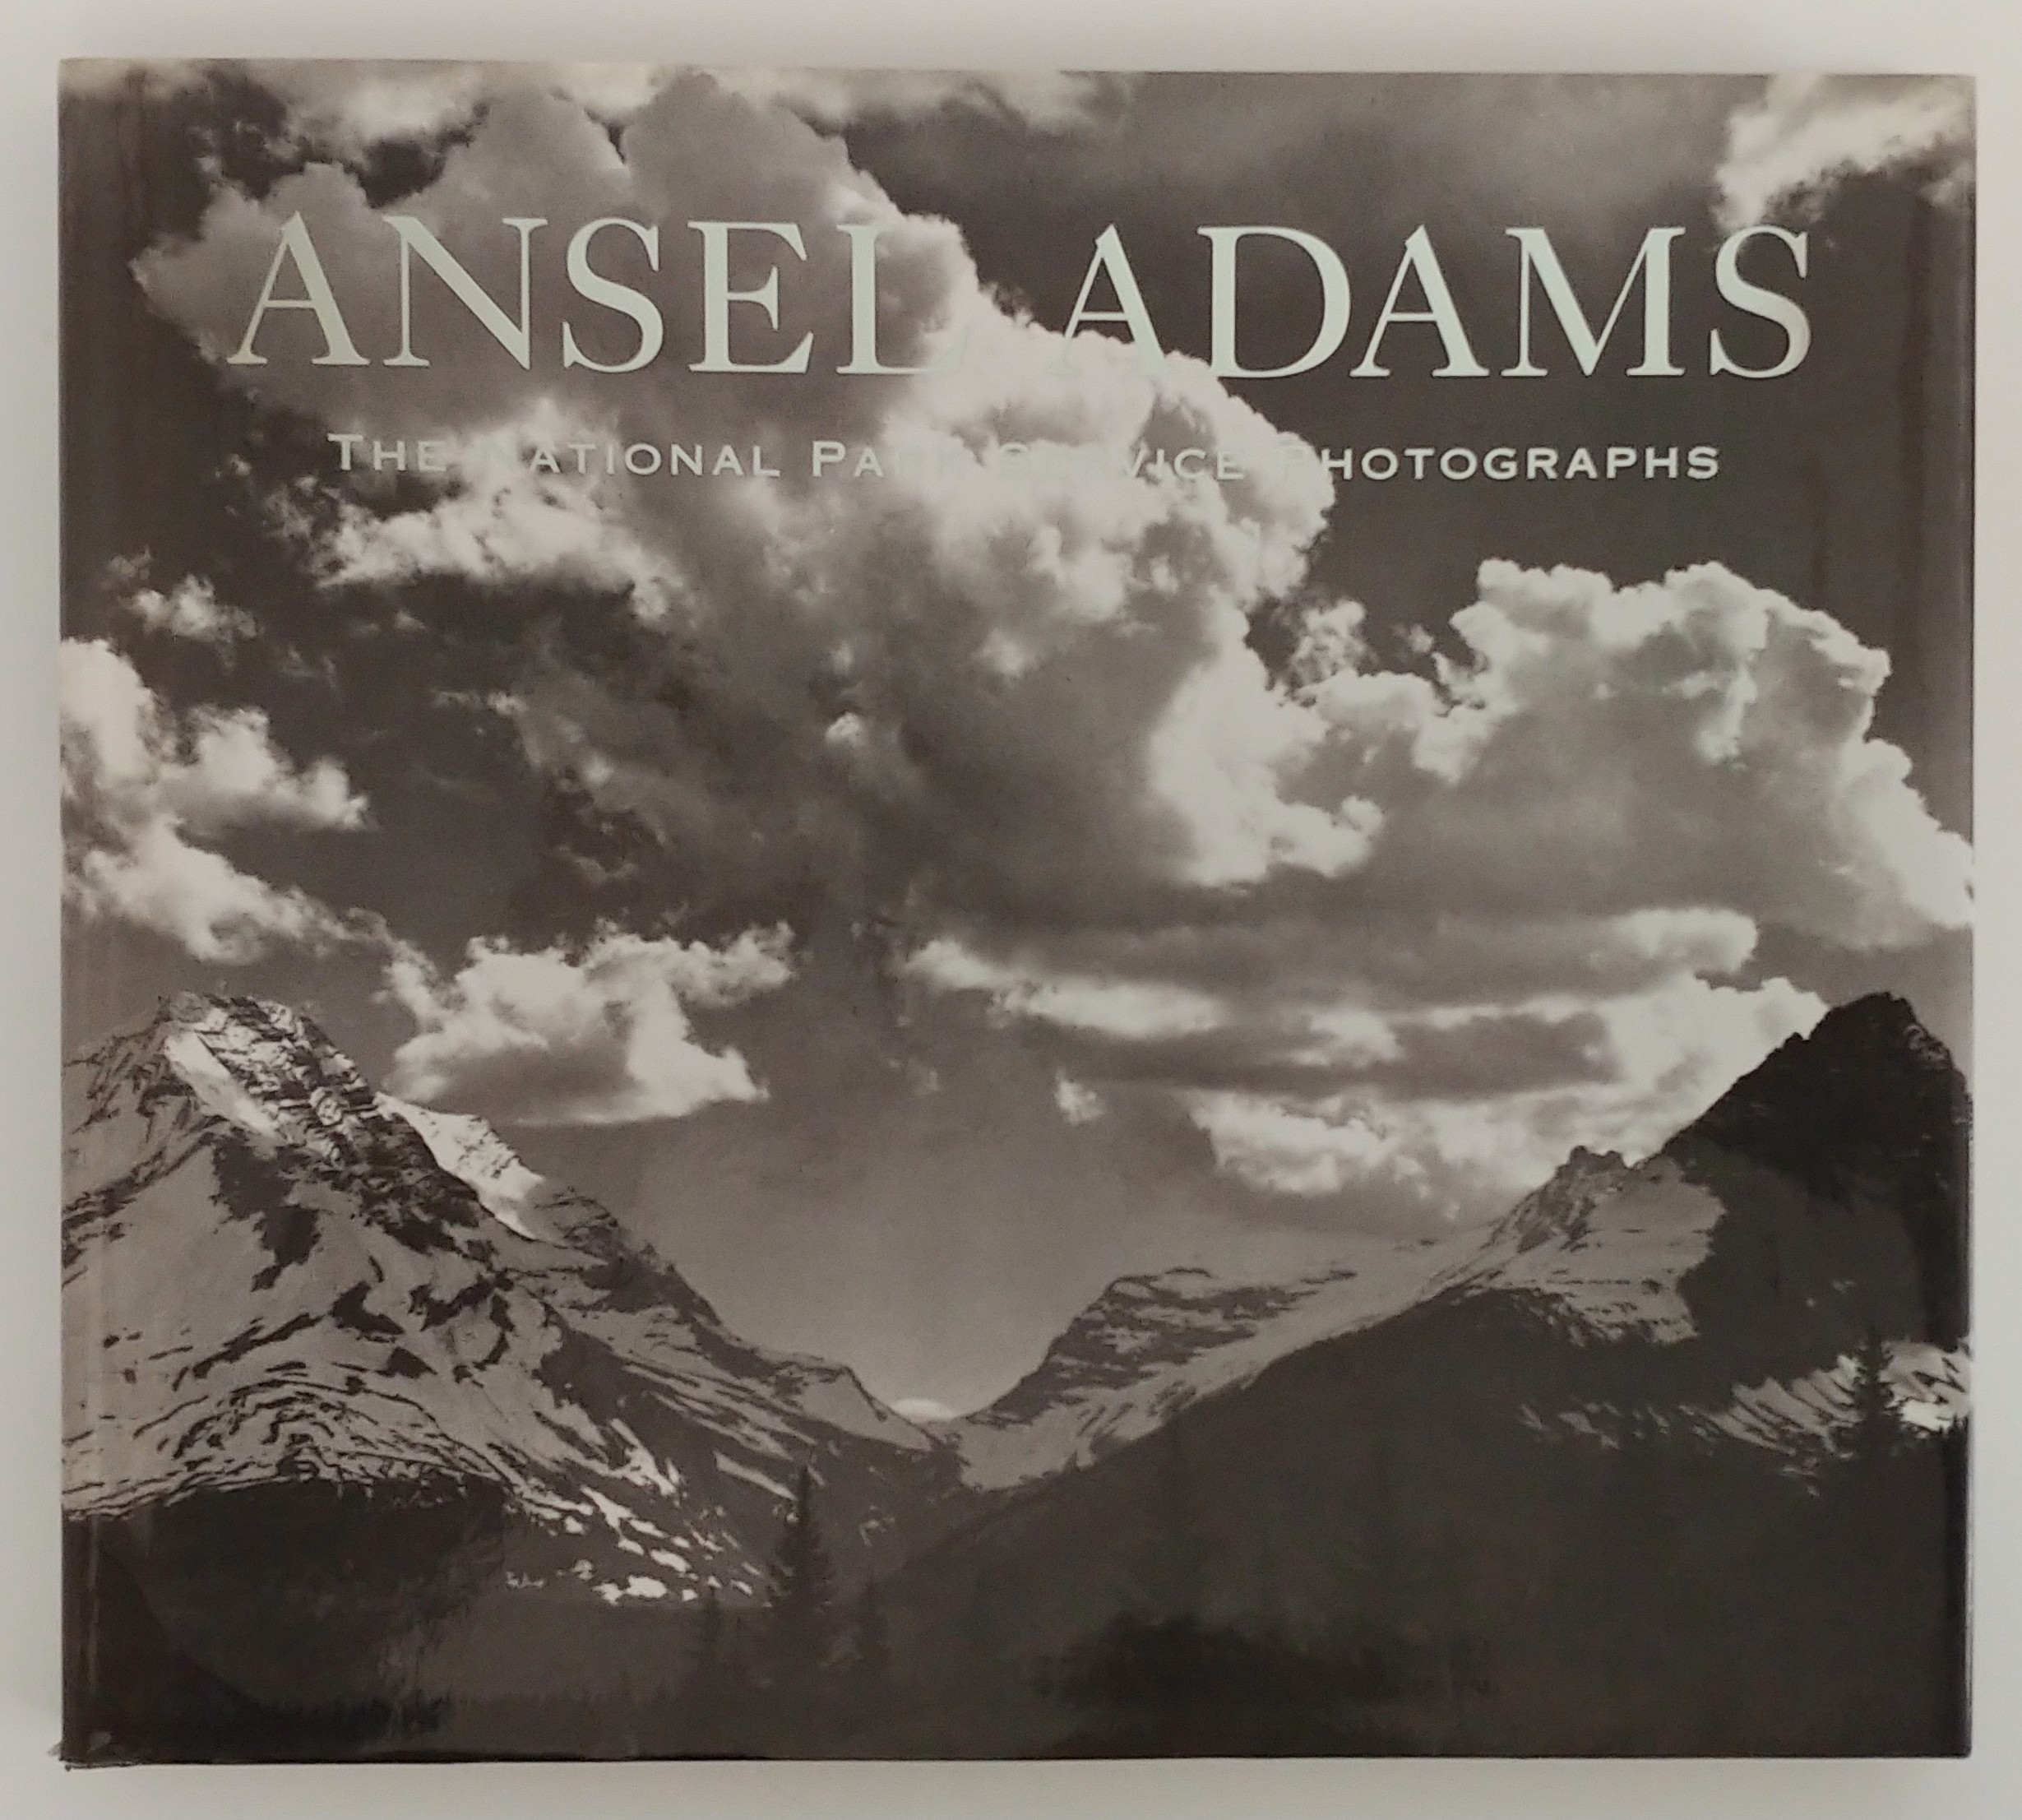 Ansel Adams: The National Park Service Photographs by Ansel Adams ...